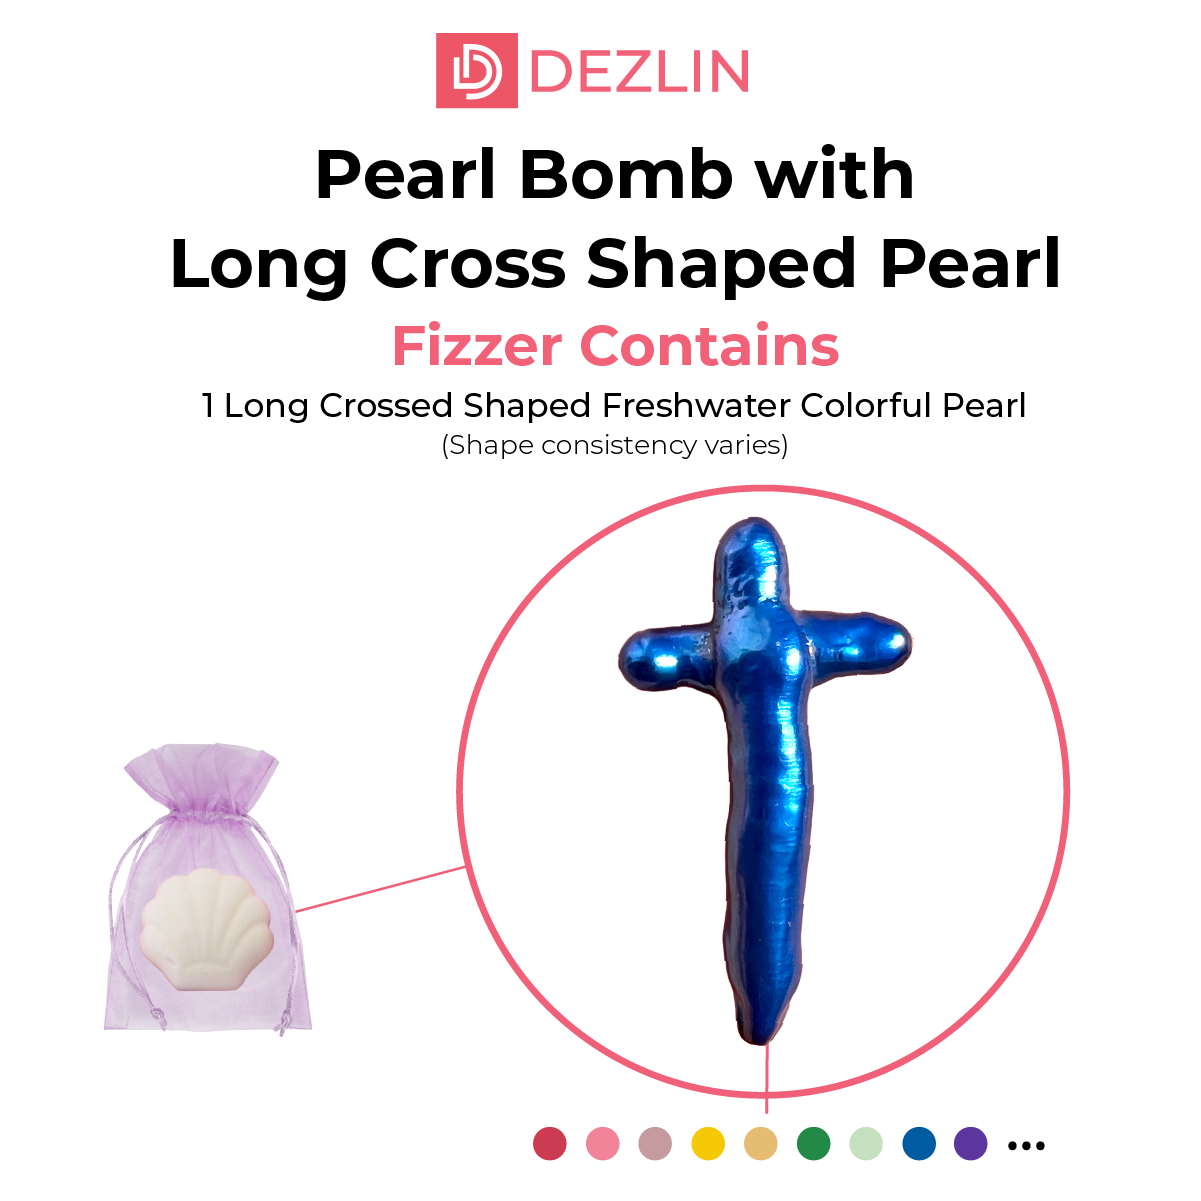 Bomba de perla con perla larga en forma de cruz